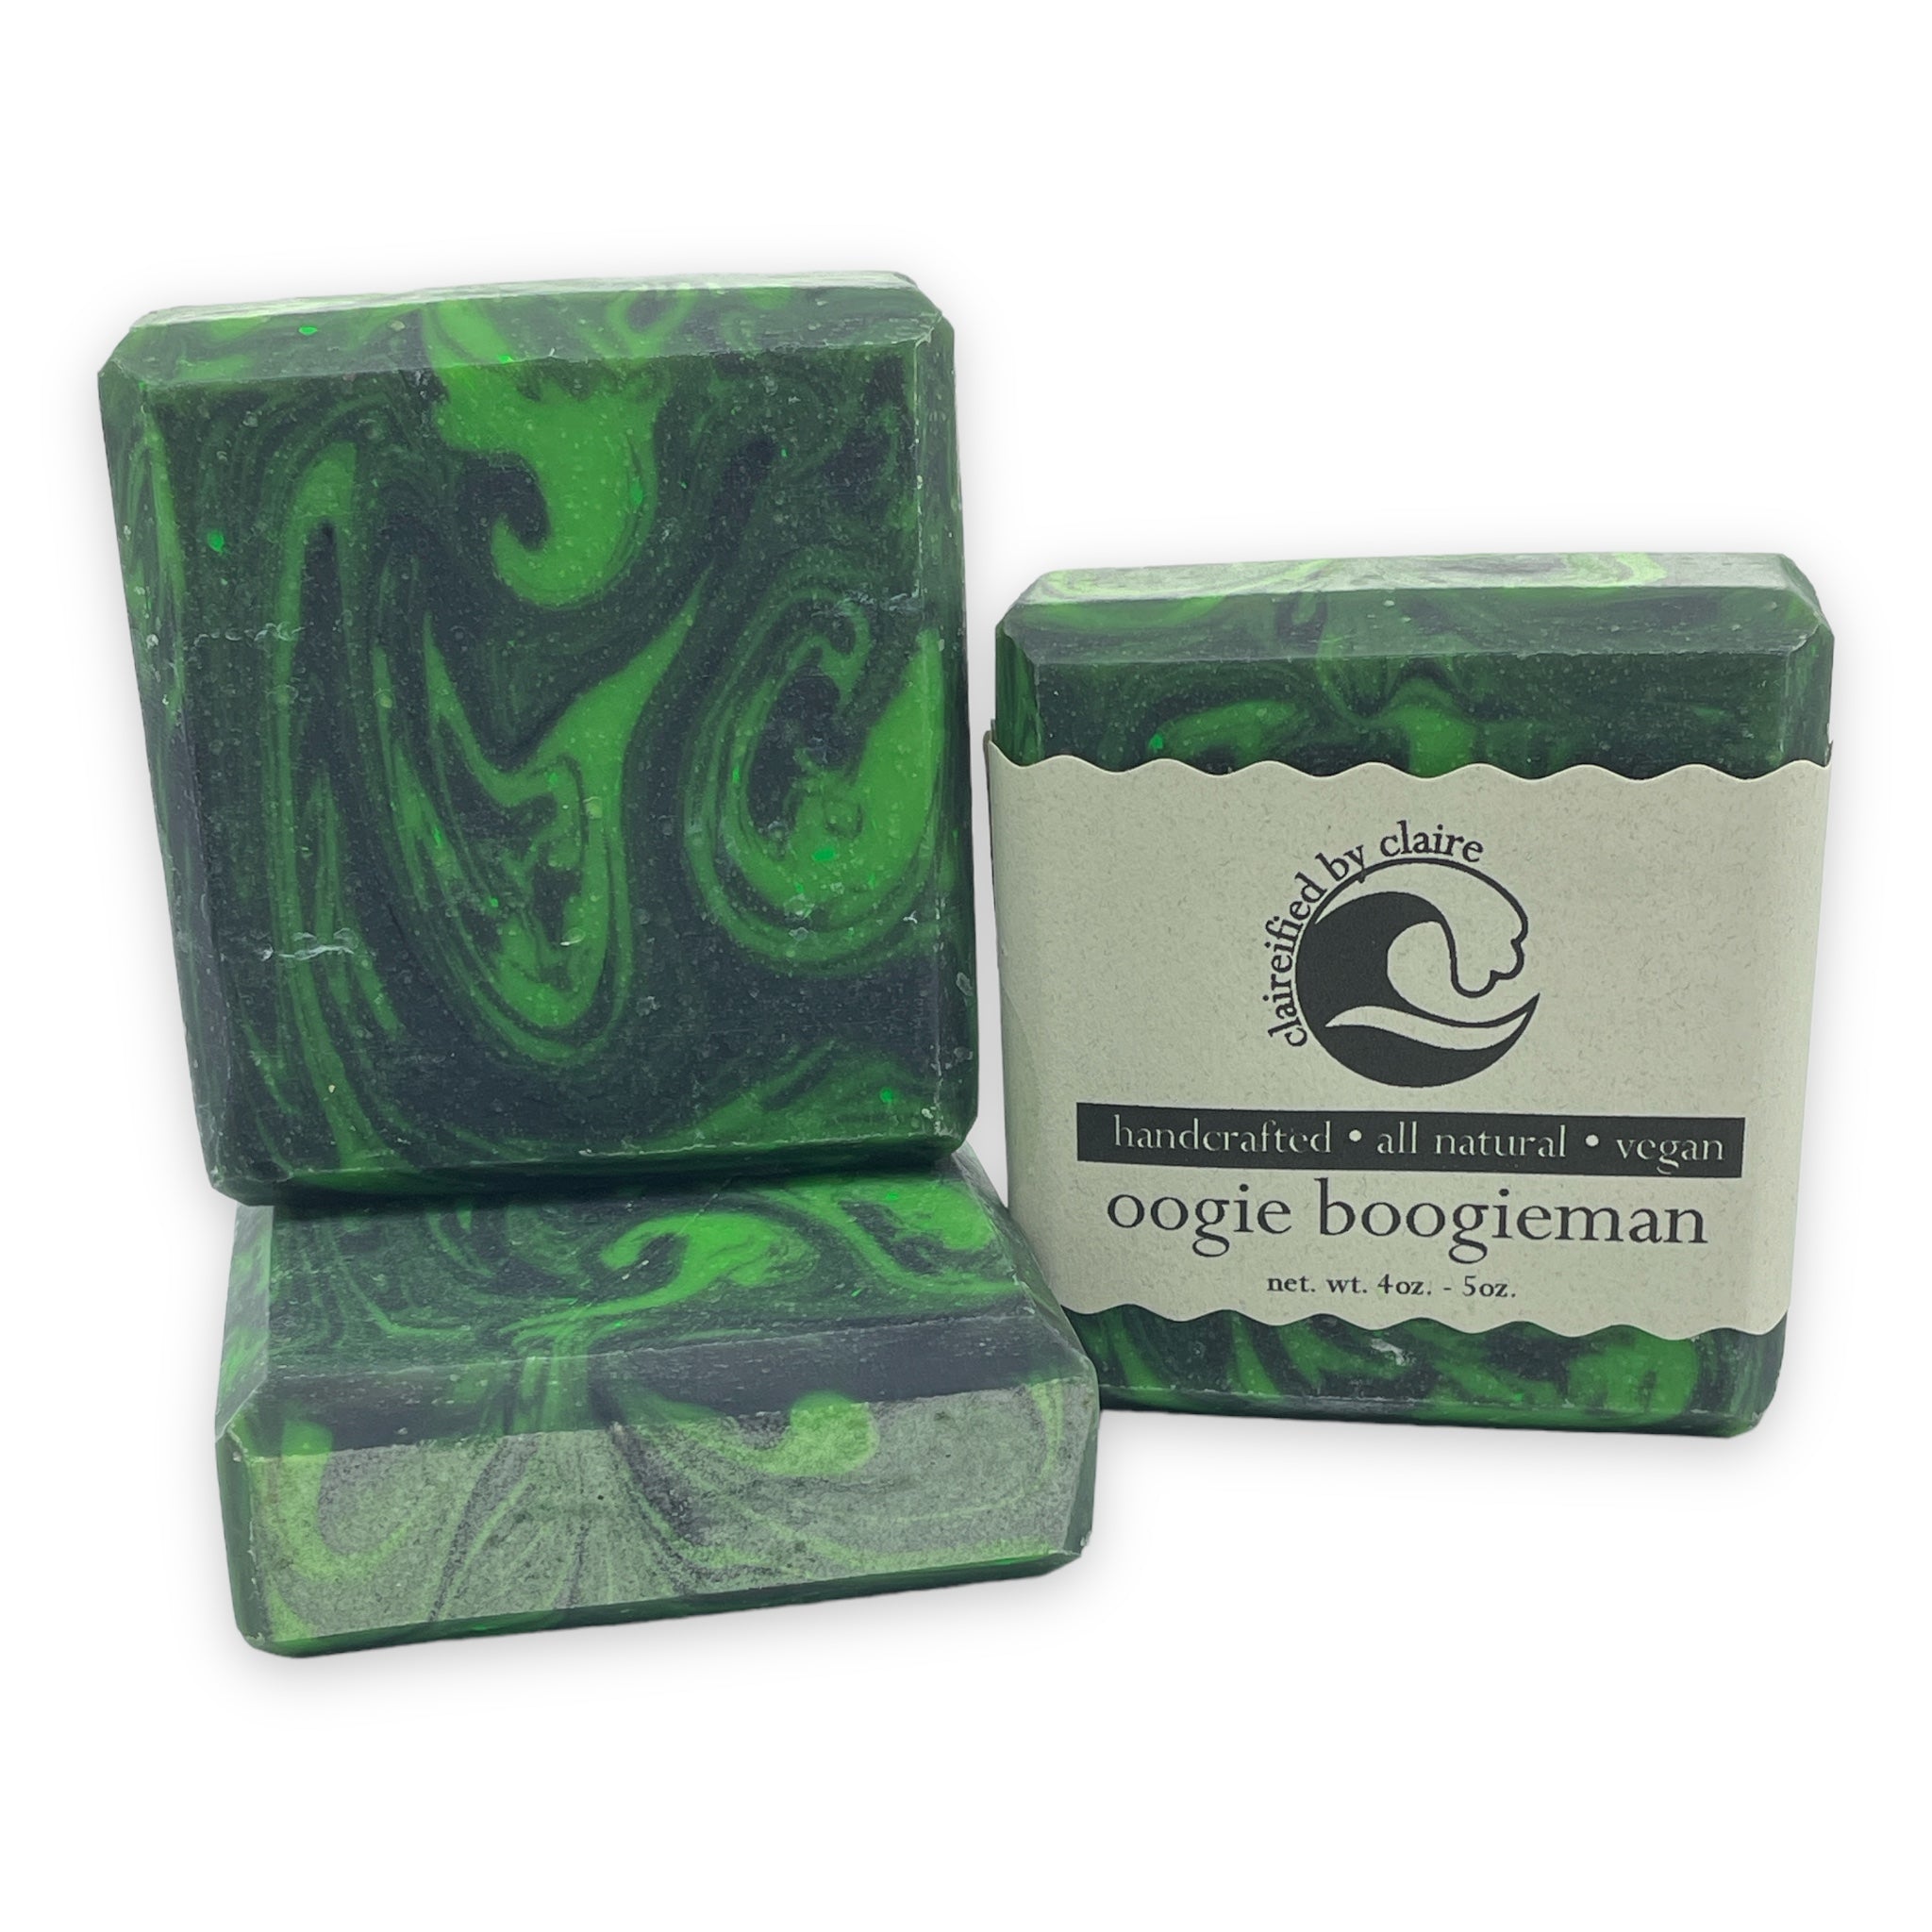 Oogie Boogieman handmade soap inspired by the Nightmare Before XMas character Oogie Boogie